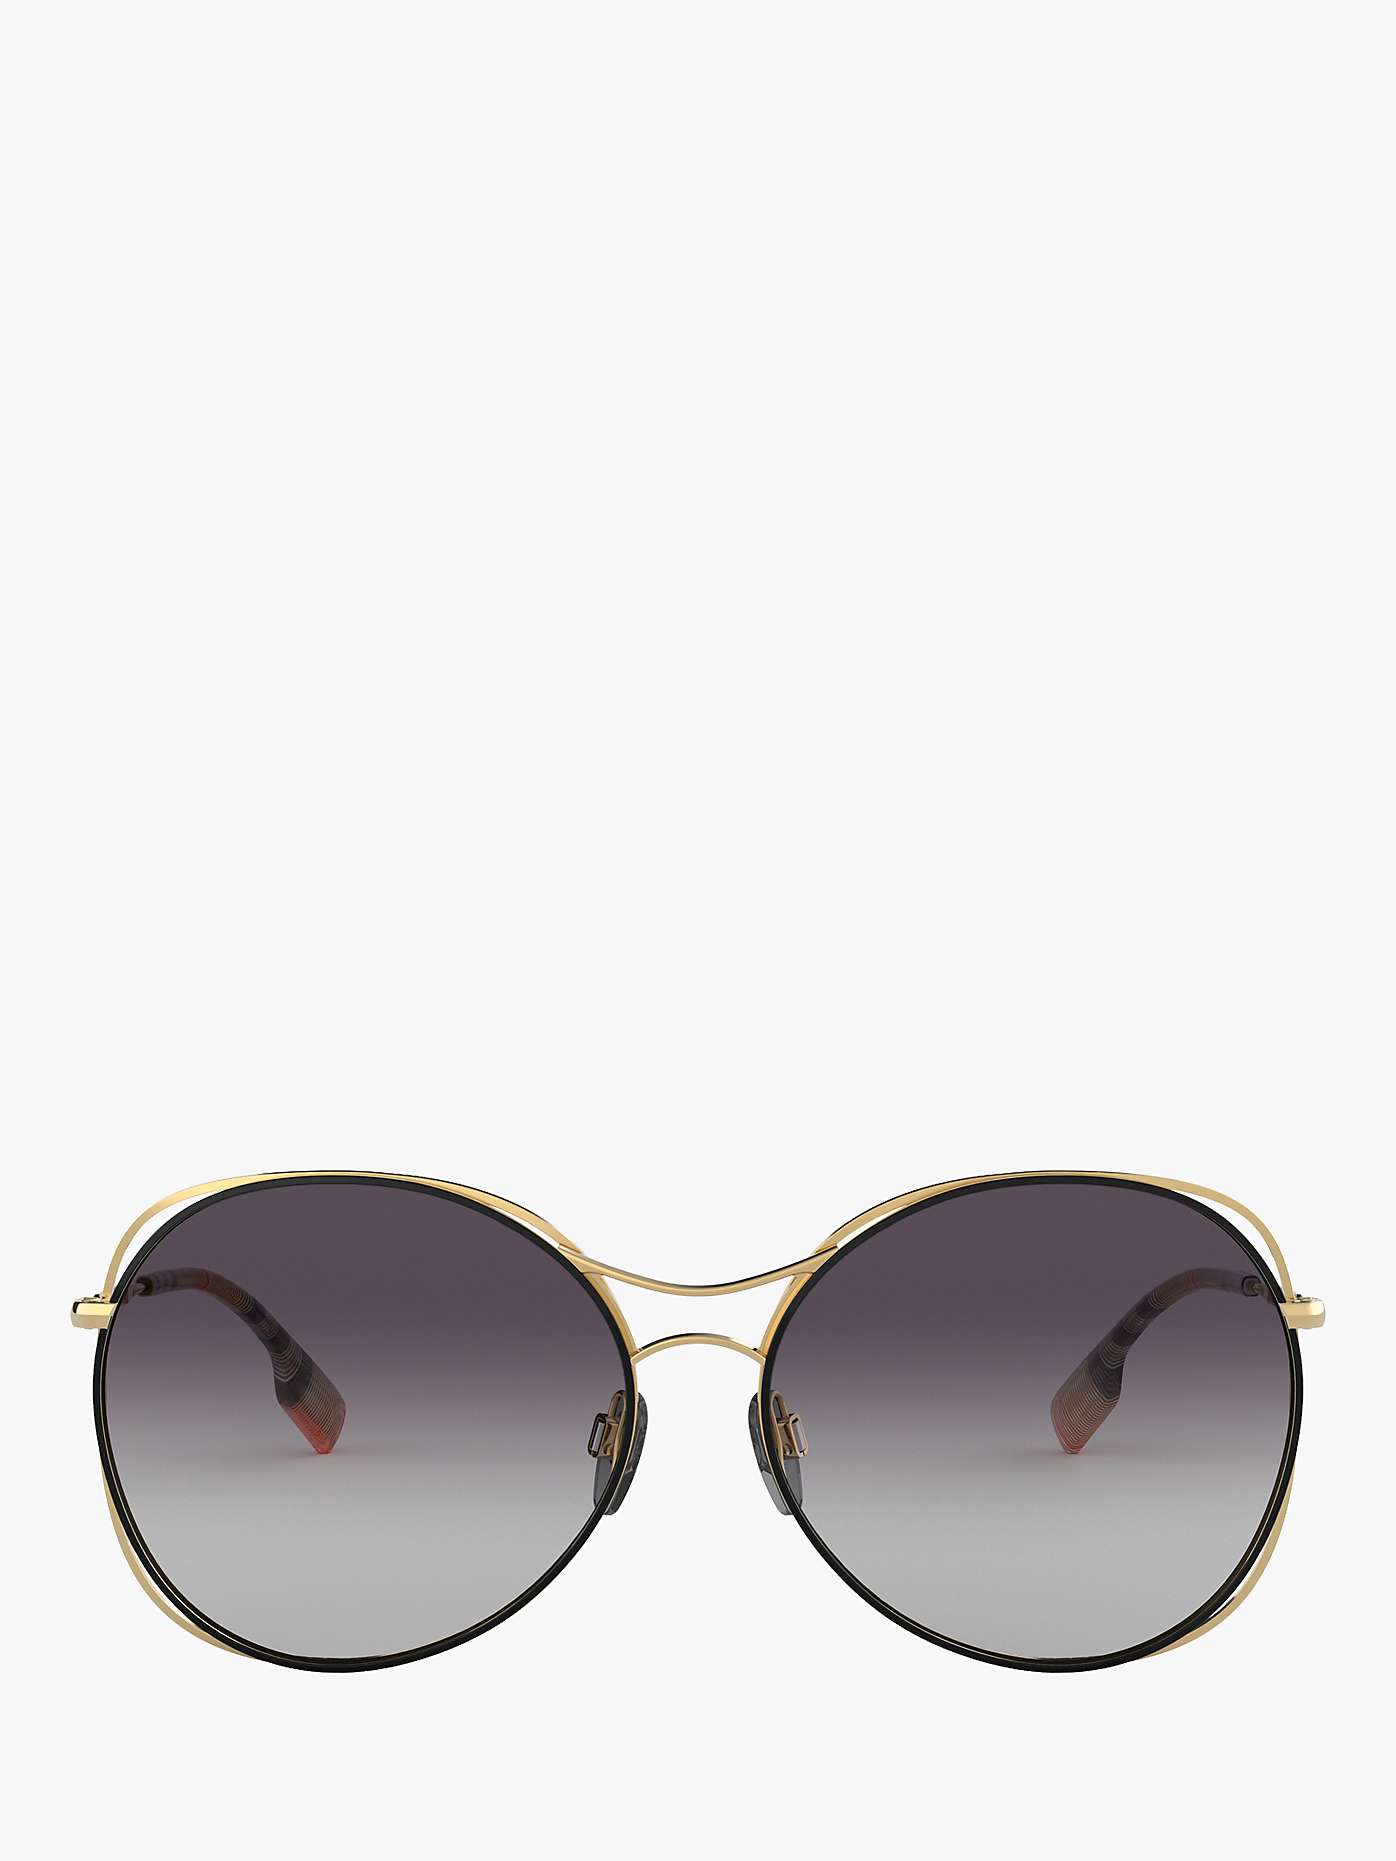 Buy Burberry BE3105 Women's Round Sunglasses, Gold/Black Gradient Online at johnlewis.com